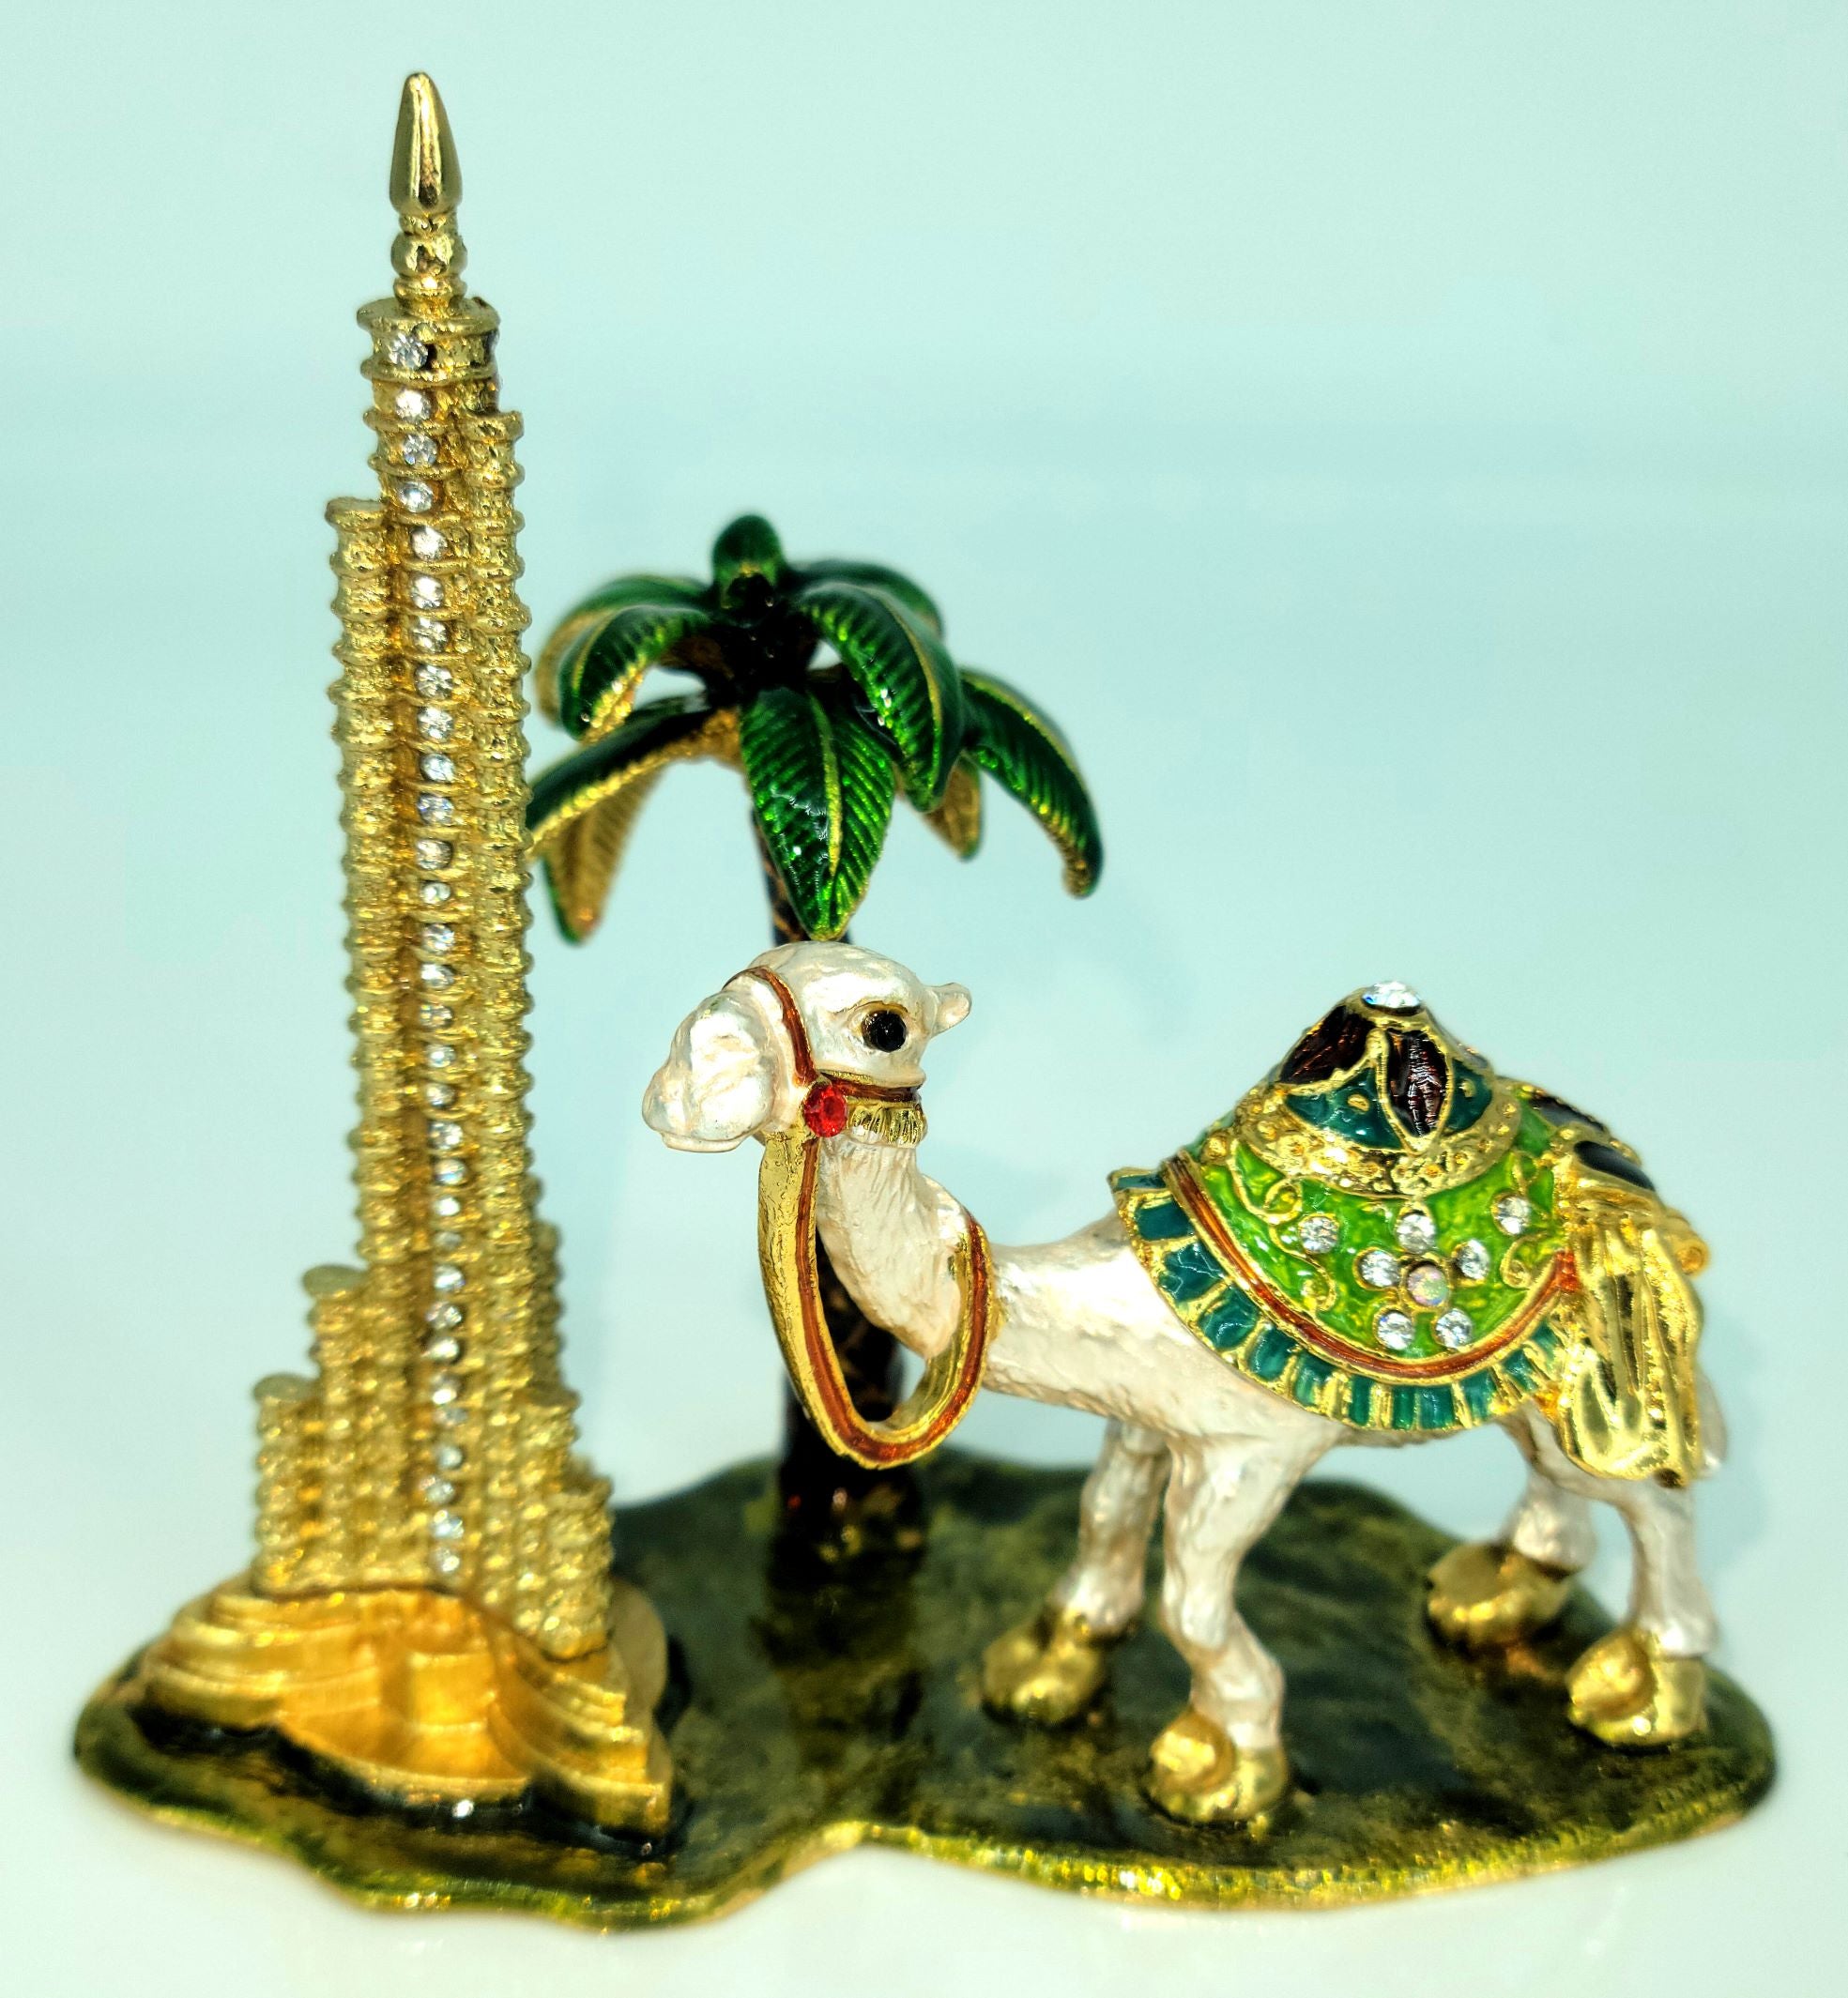 Camel with Burj Khalifa and palm tree Decor I Pakistani Artisan Design I Decoration Piece Accent I Metal Stone Decor